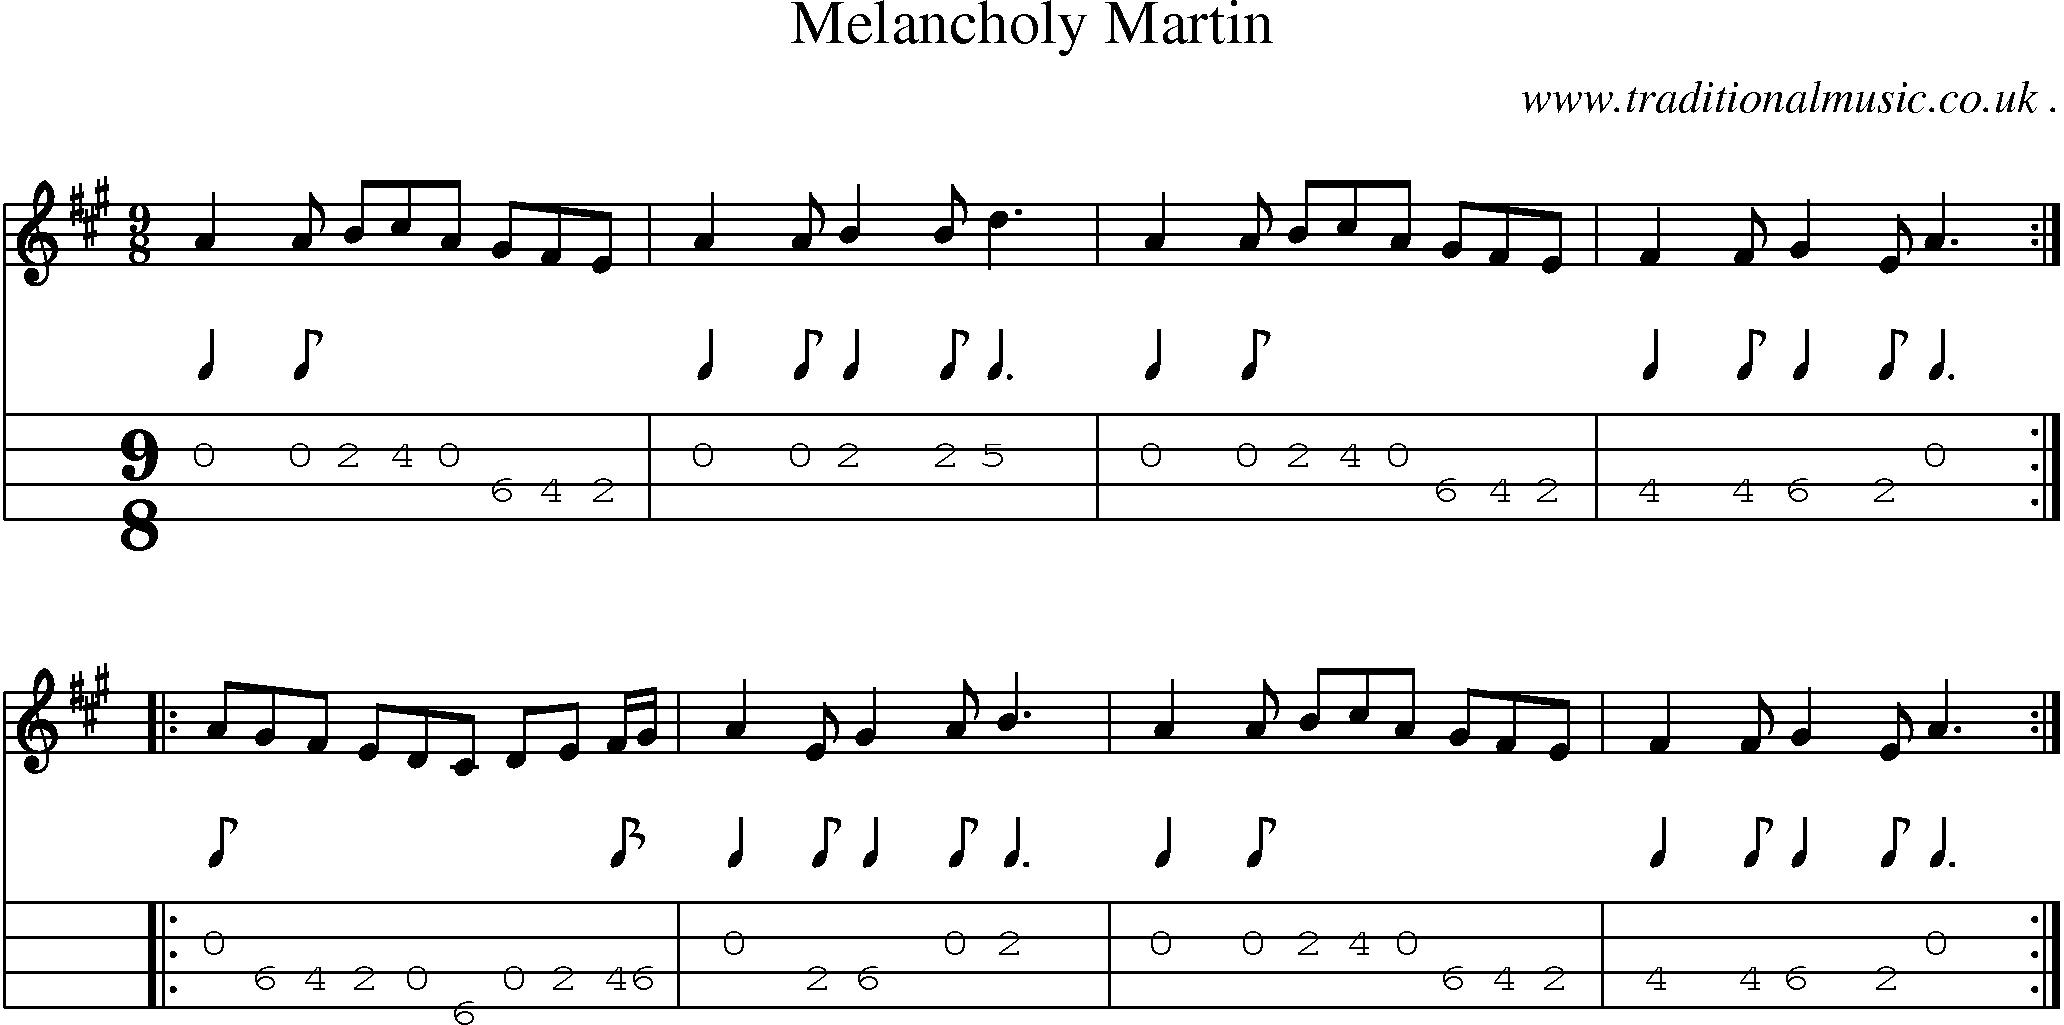 Sheet-Music and Mandolin Tabs for Melancholy Martin